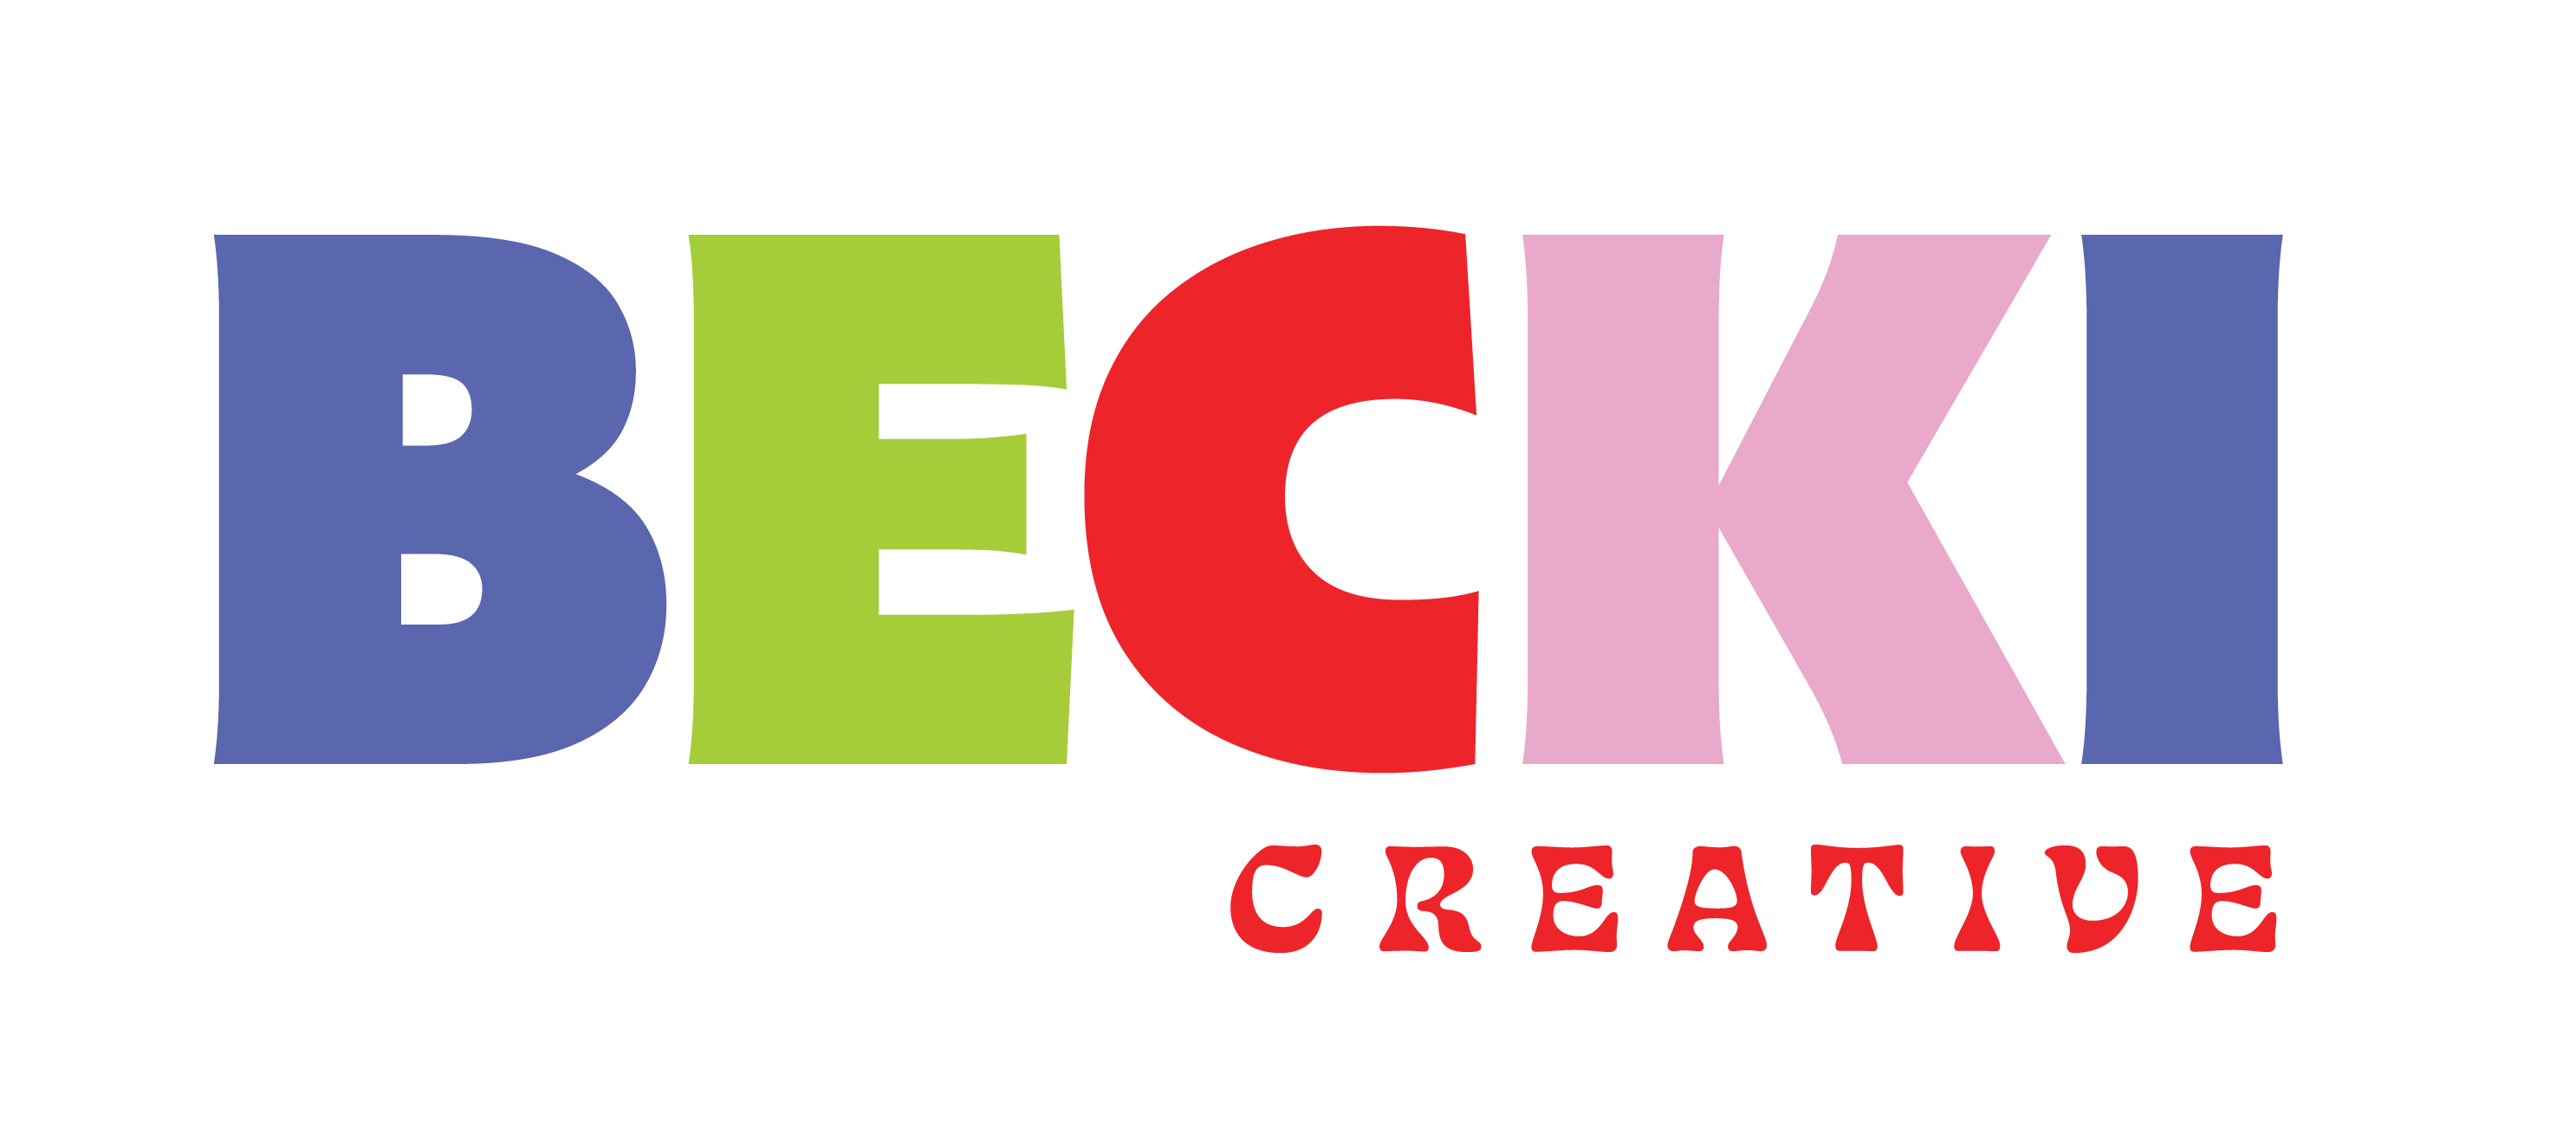 BECKI CREATIVE